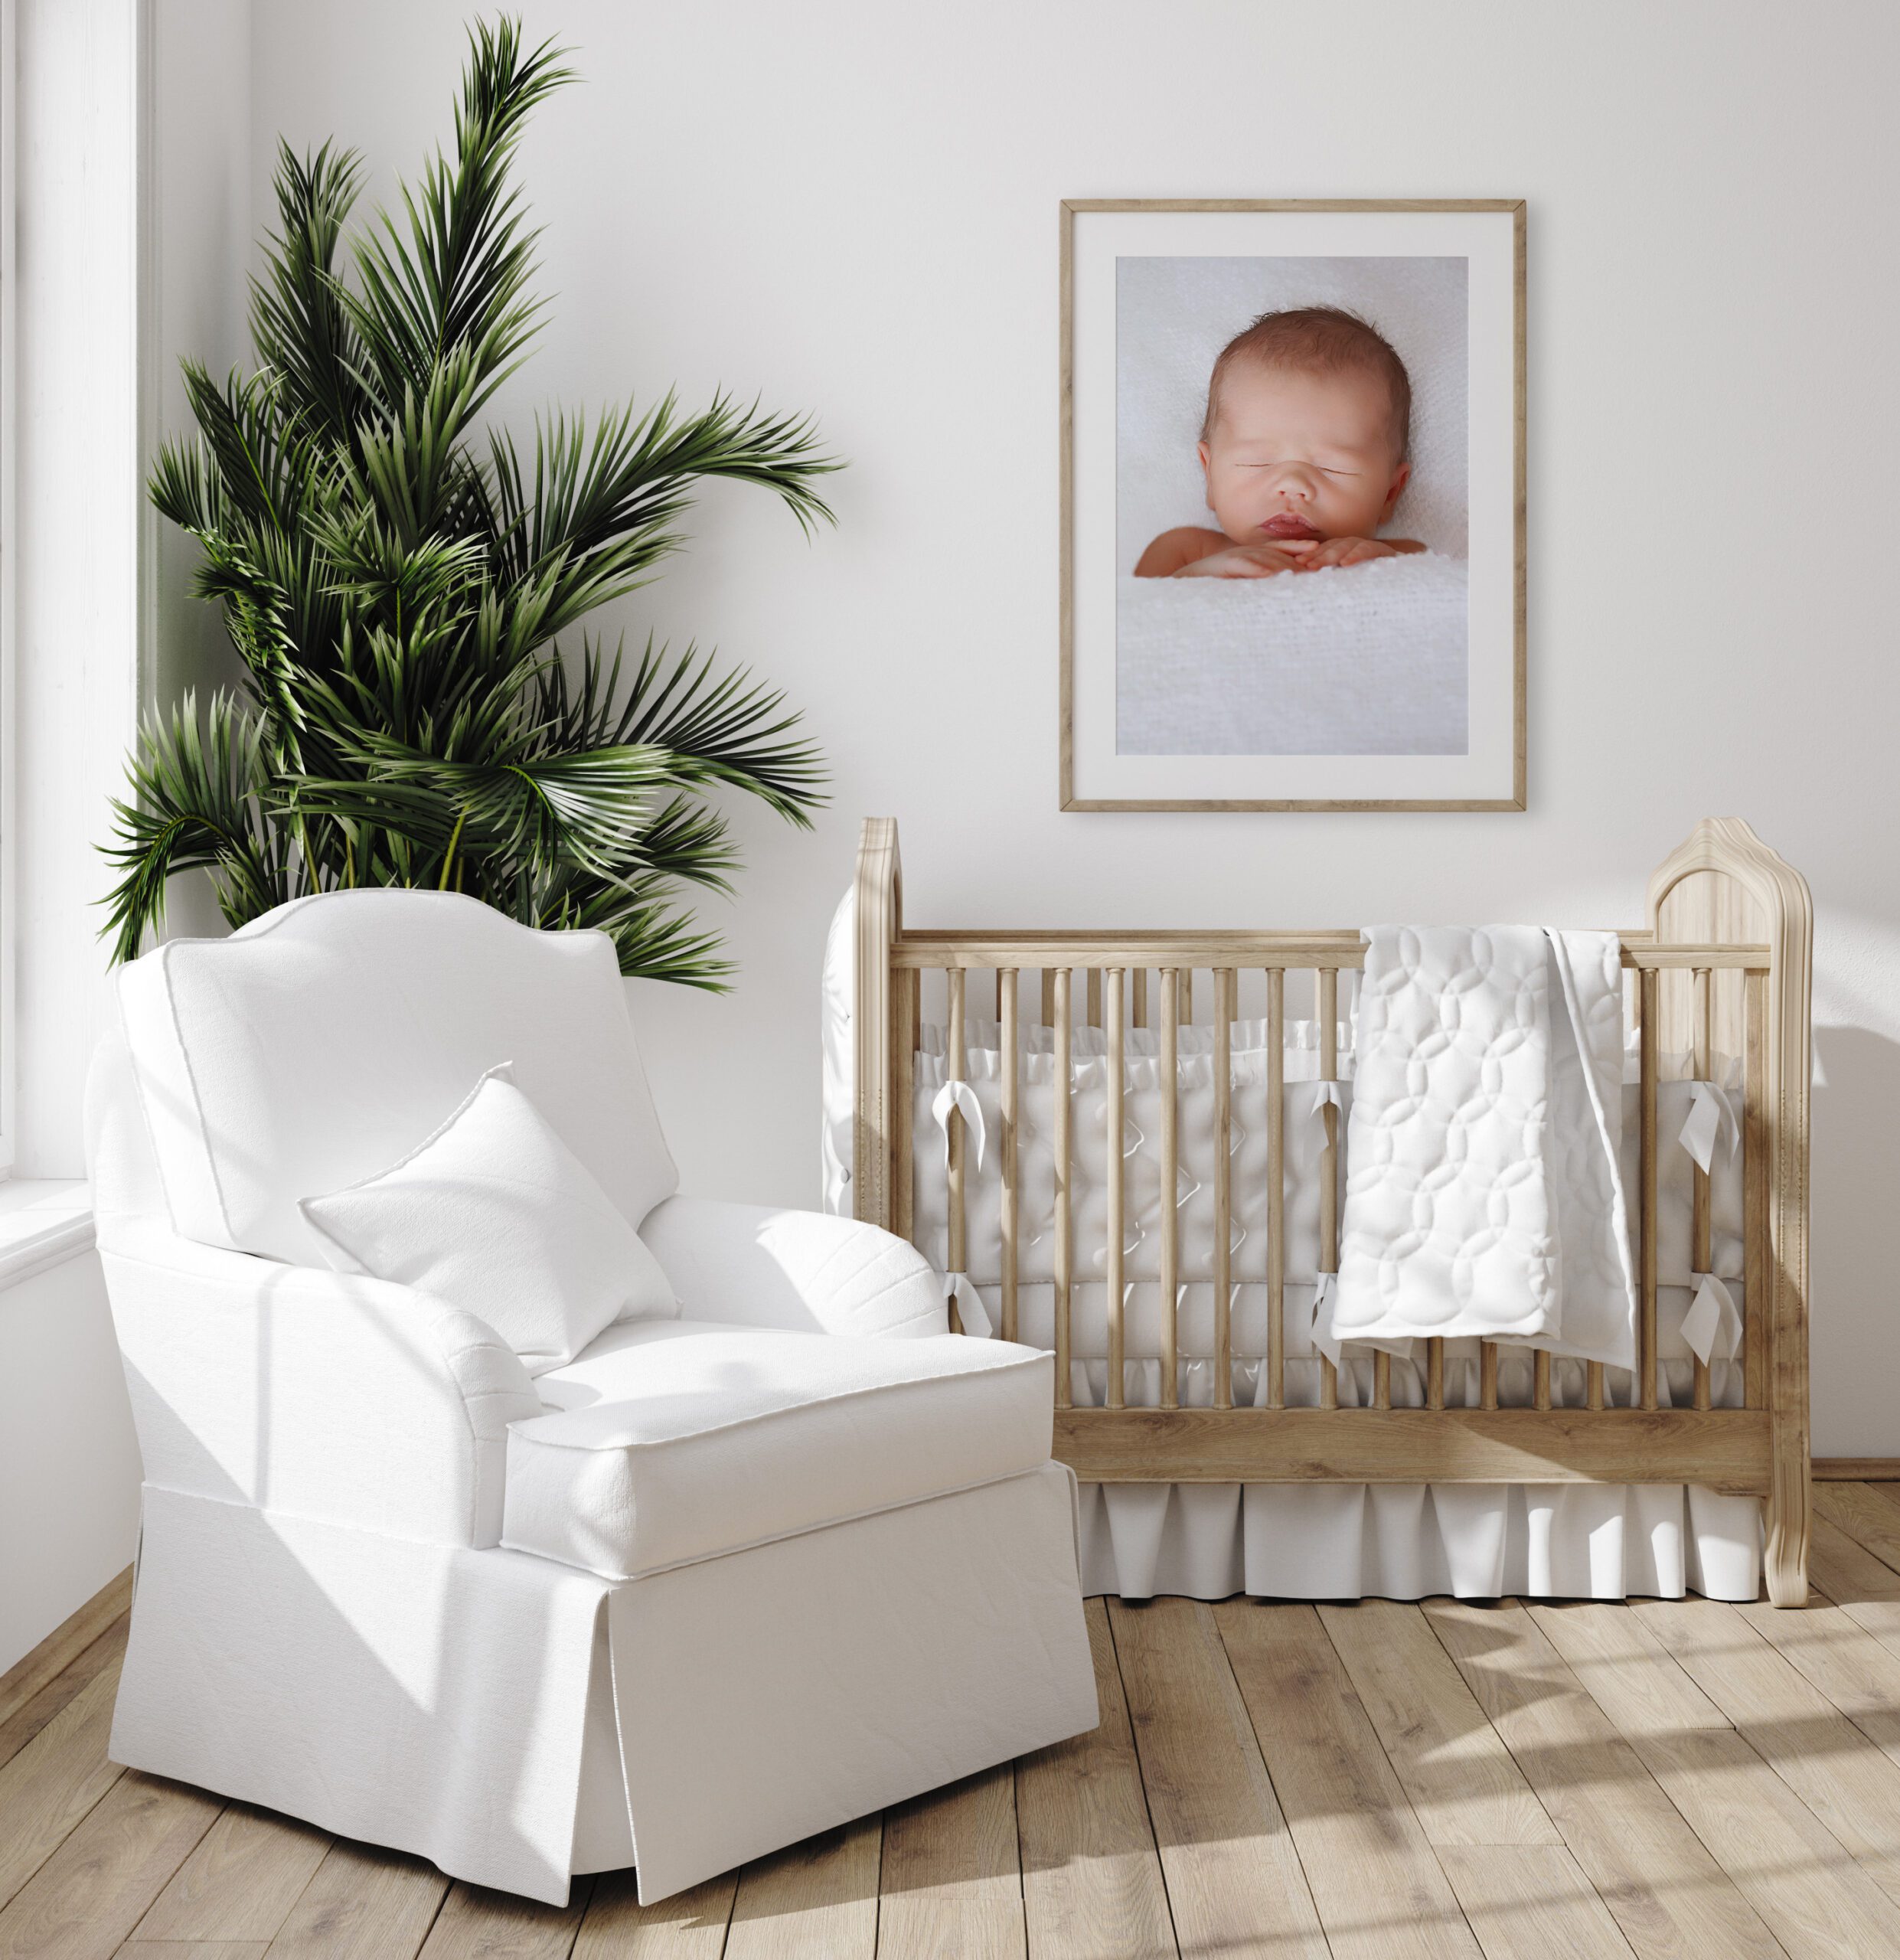 Framed newborn photography in nursery by baby photographer Dallas